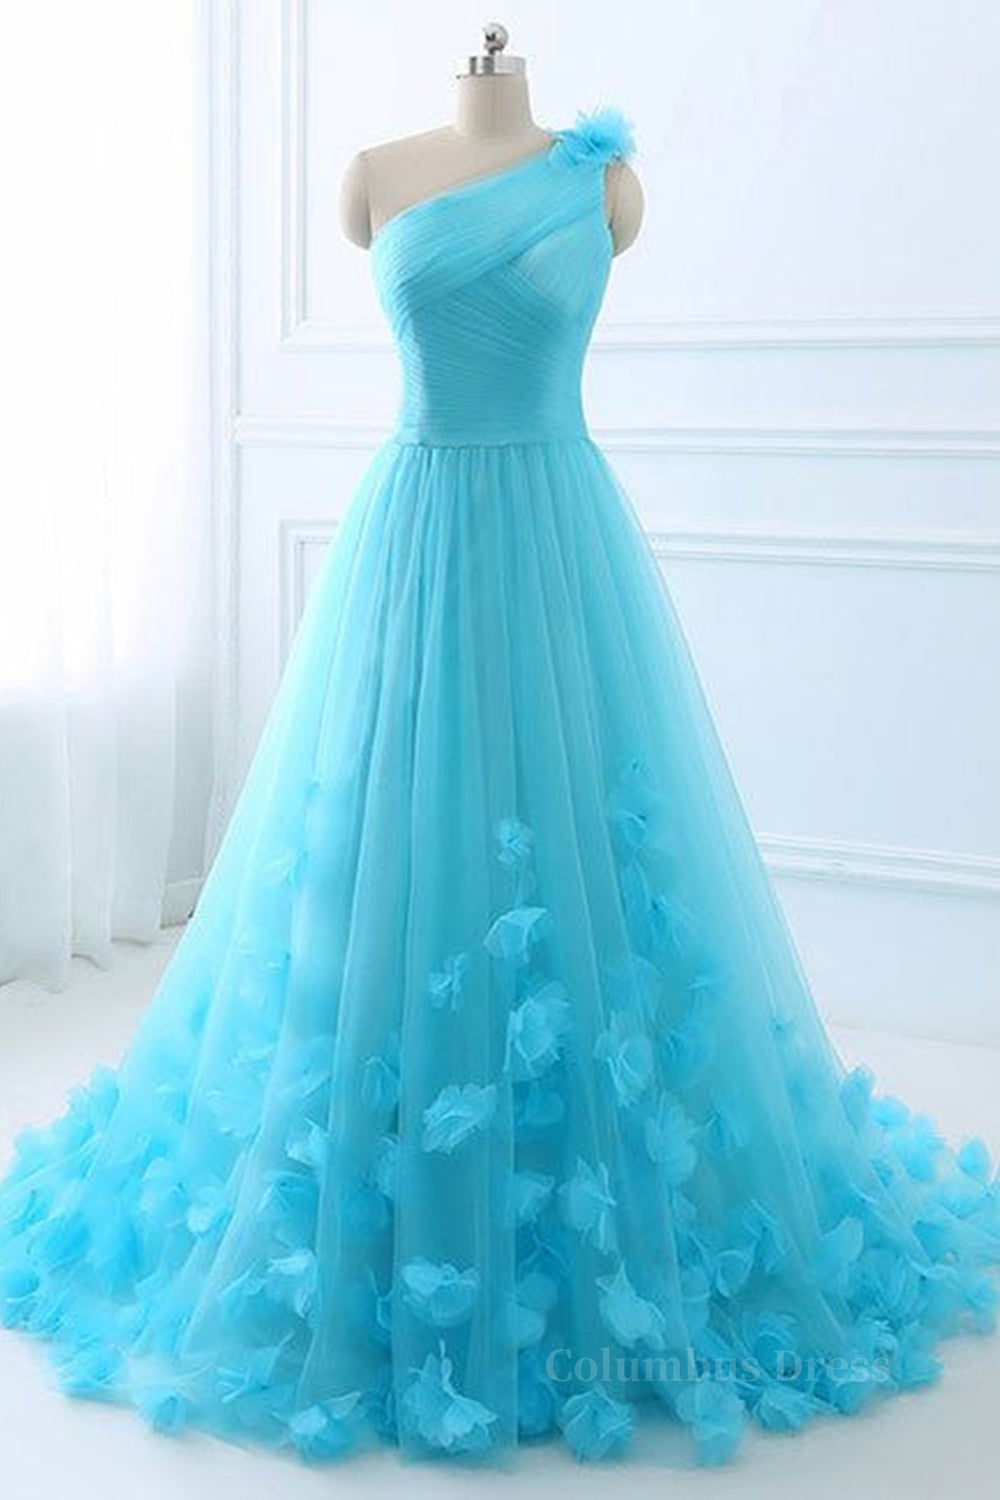 One Shoulder Blue 3D Flowers Long Corset Prom Dress, Blue Floral Corset Formal Evening Dress outfit, Evening Dresses Black